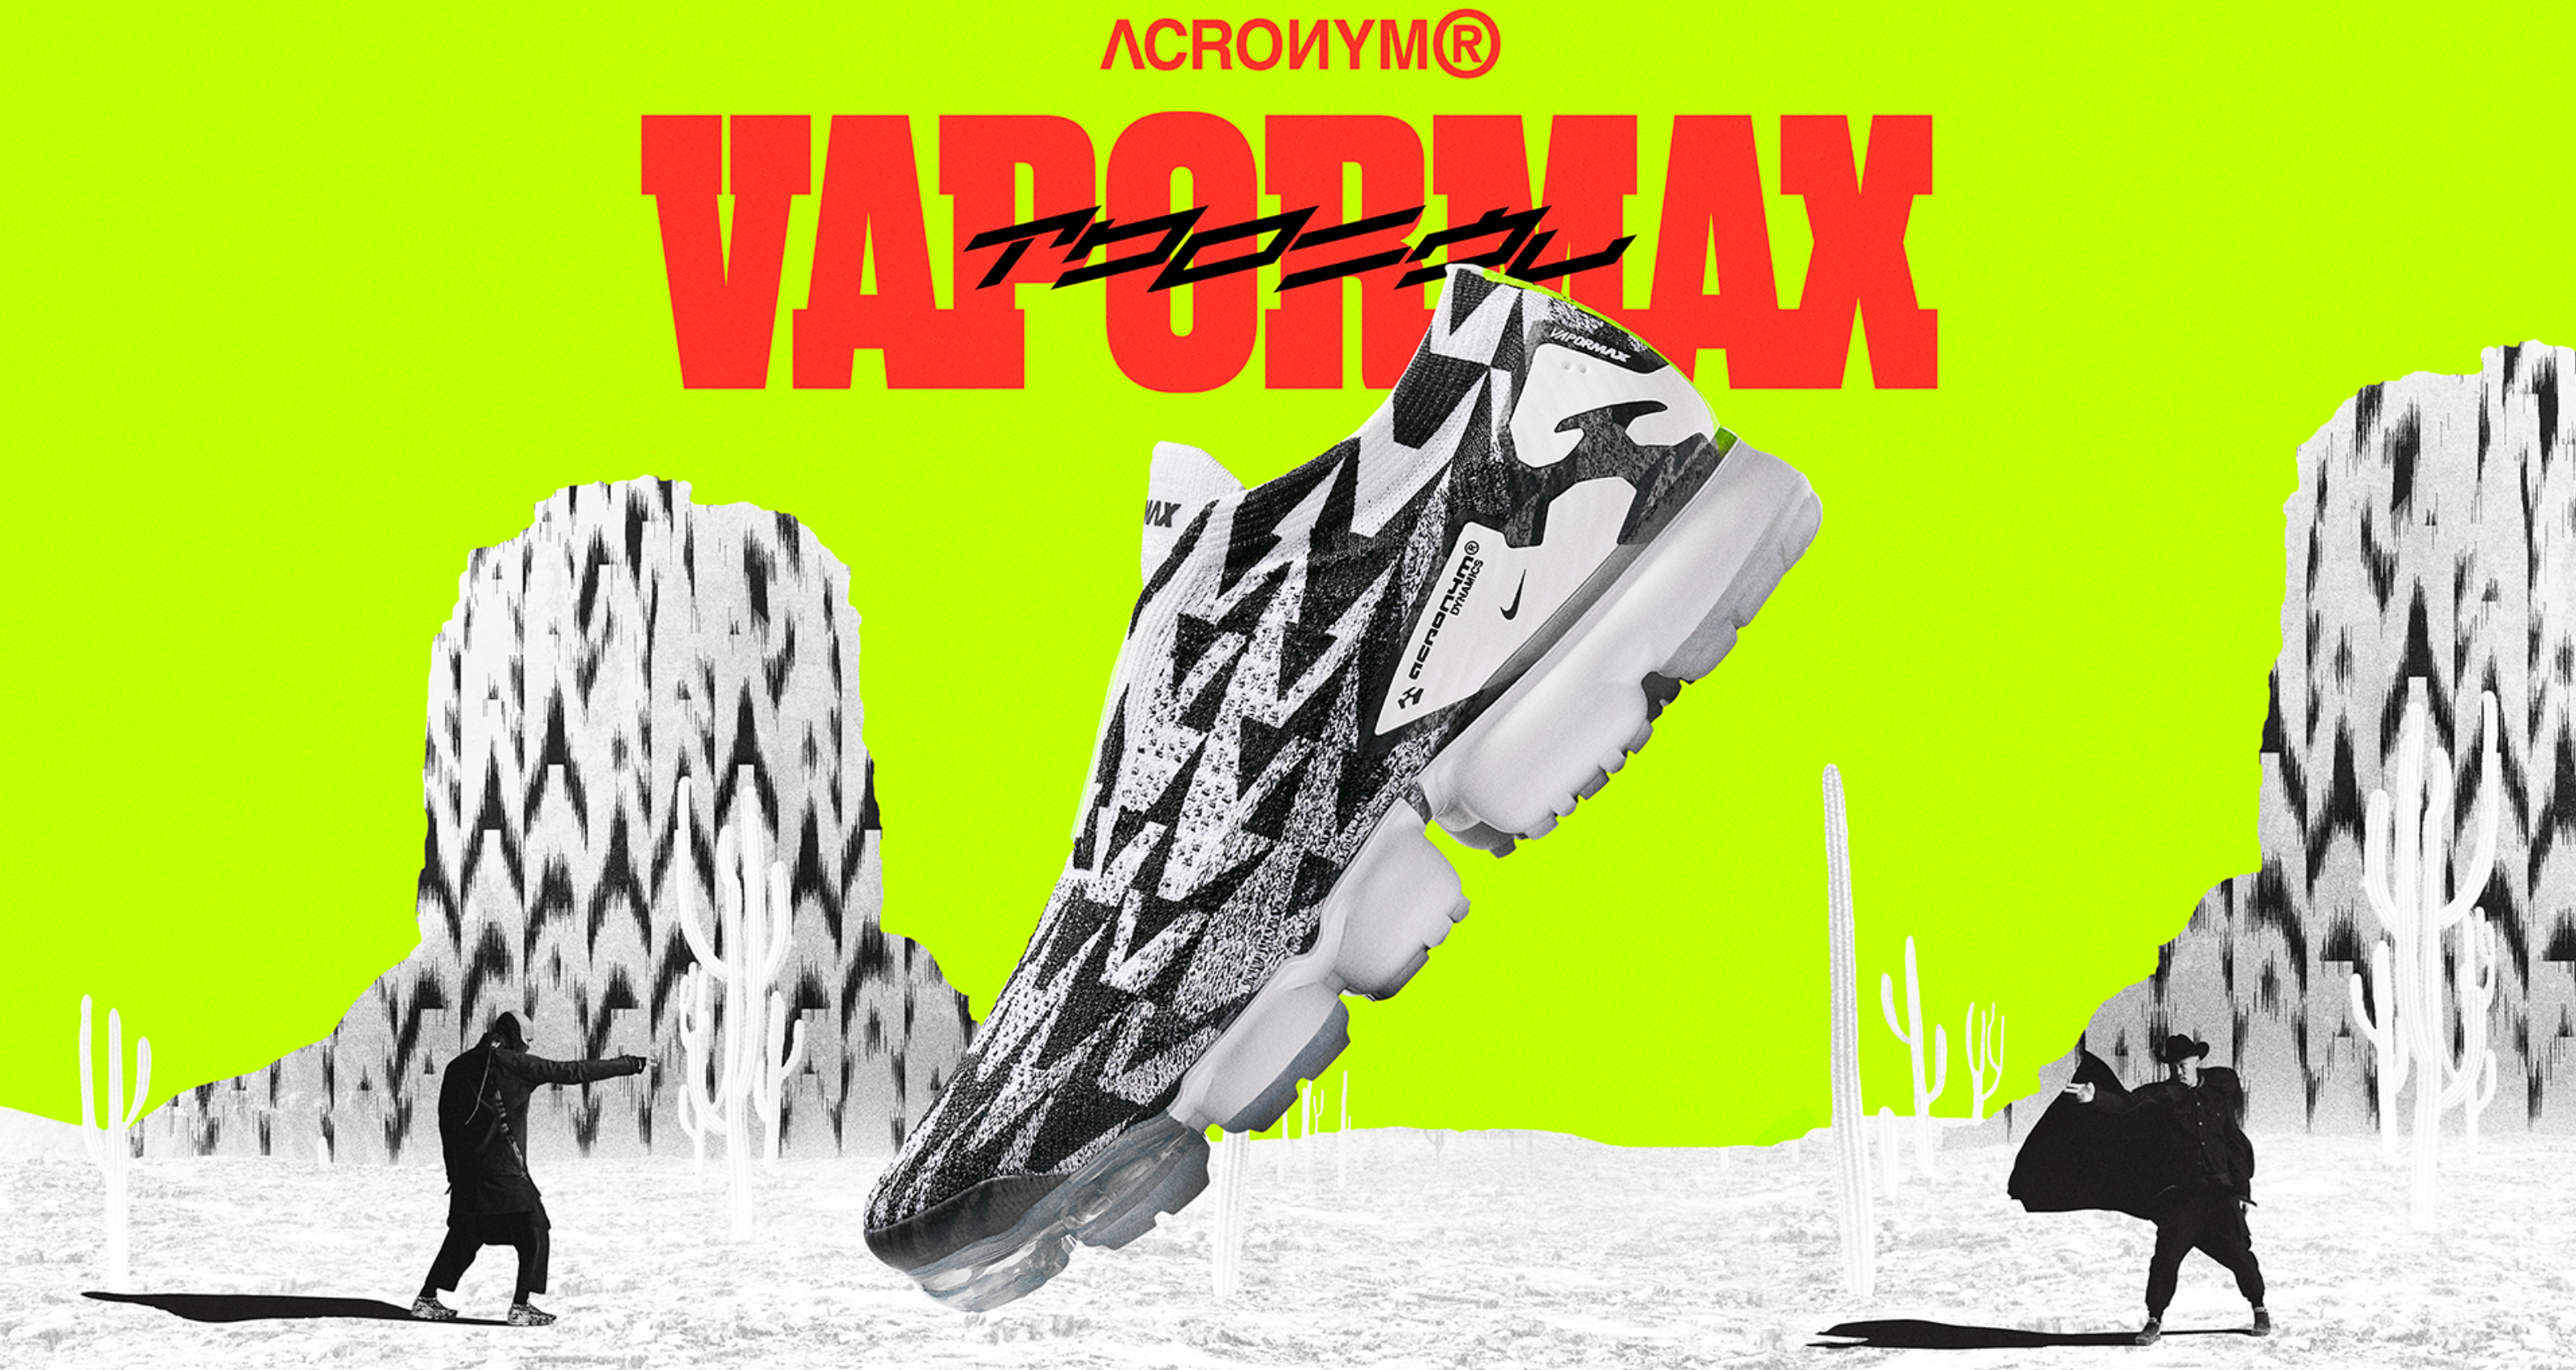 Jeff Staple on the Nike x Acronym Air Vapormax FK Moc 2 card image